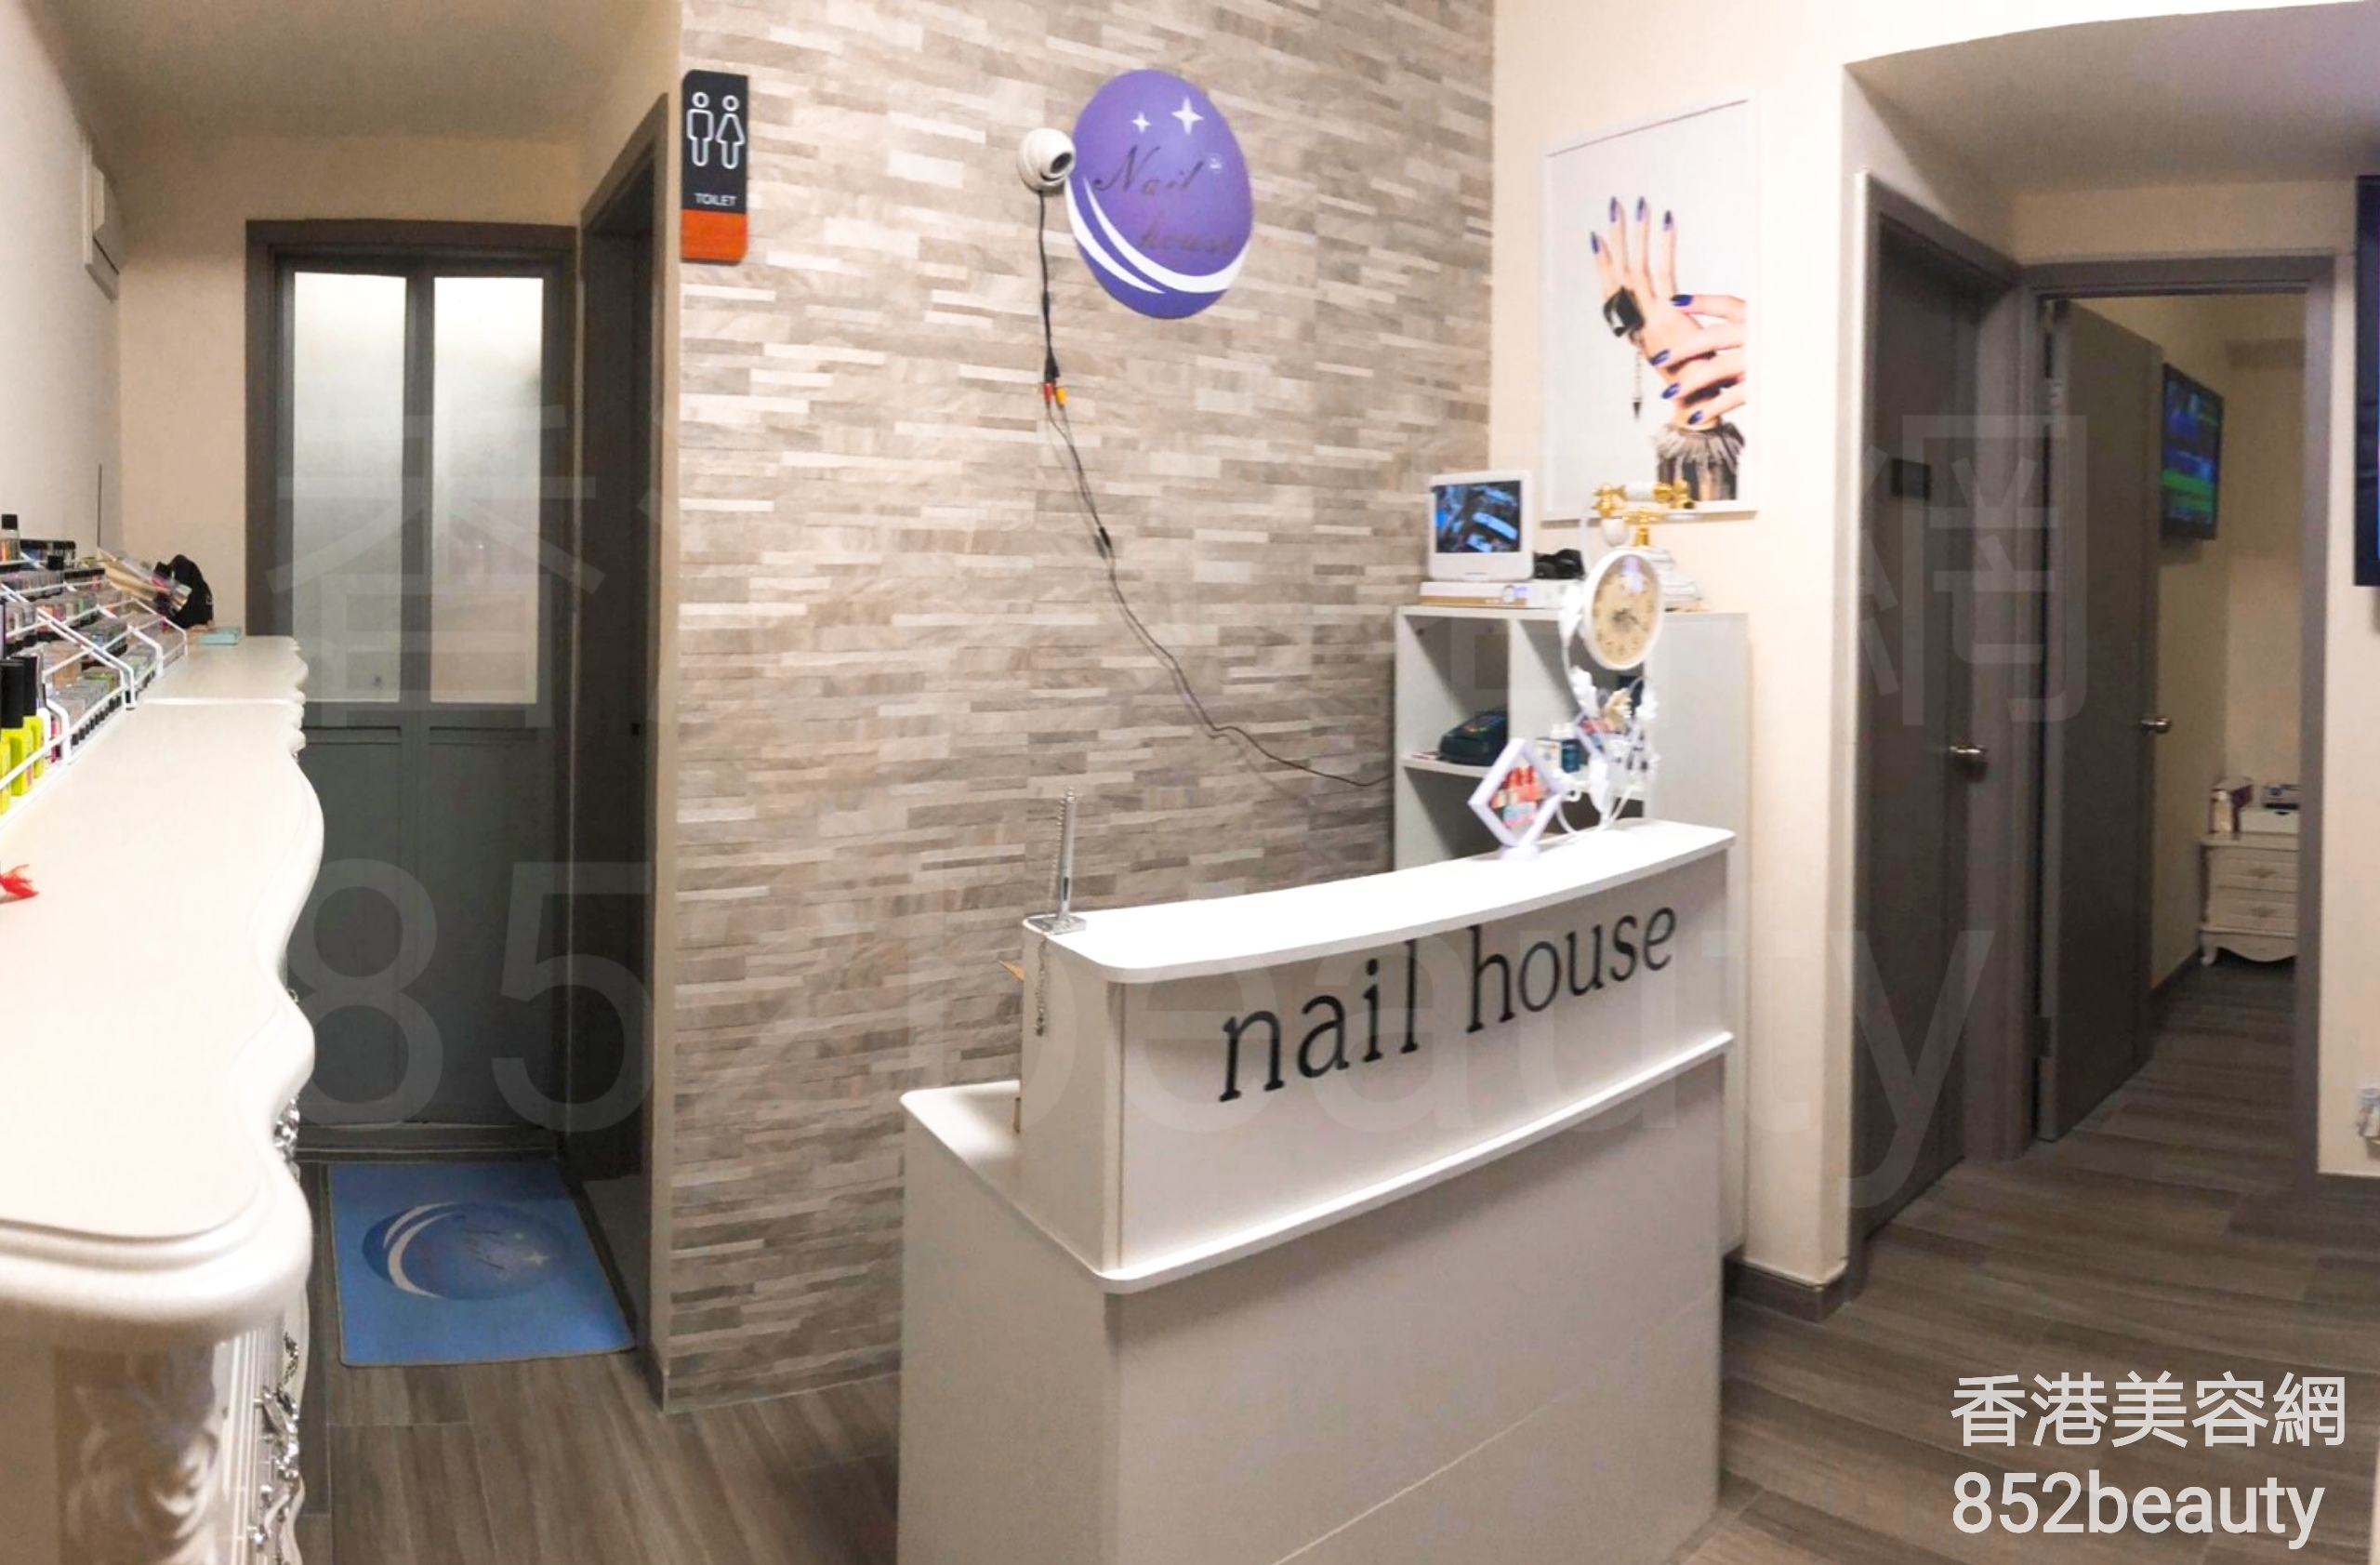 Beauty Salon: NAIL HOUSE 美甲屋